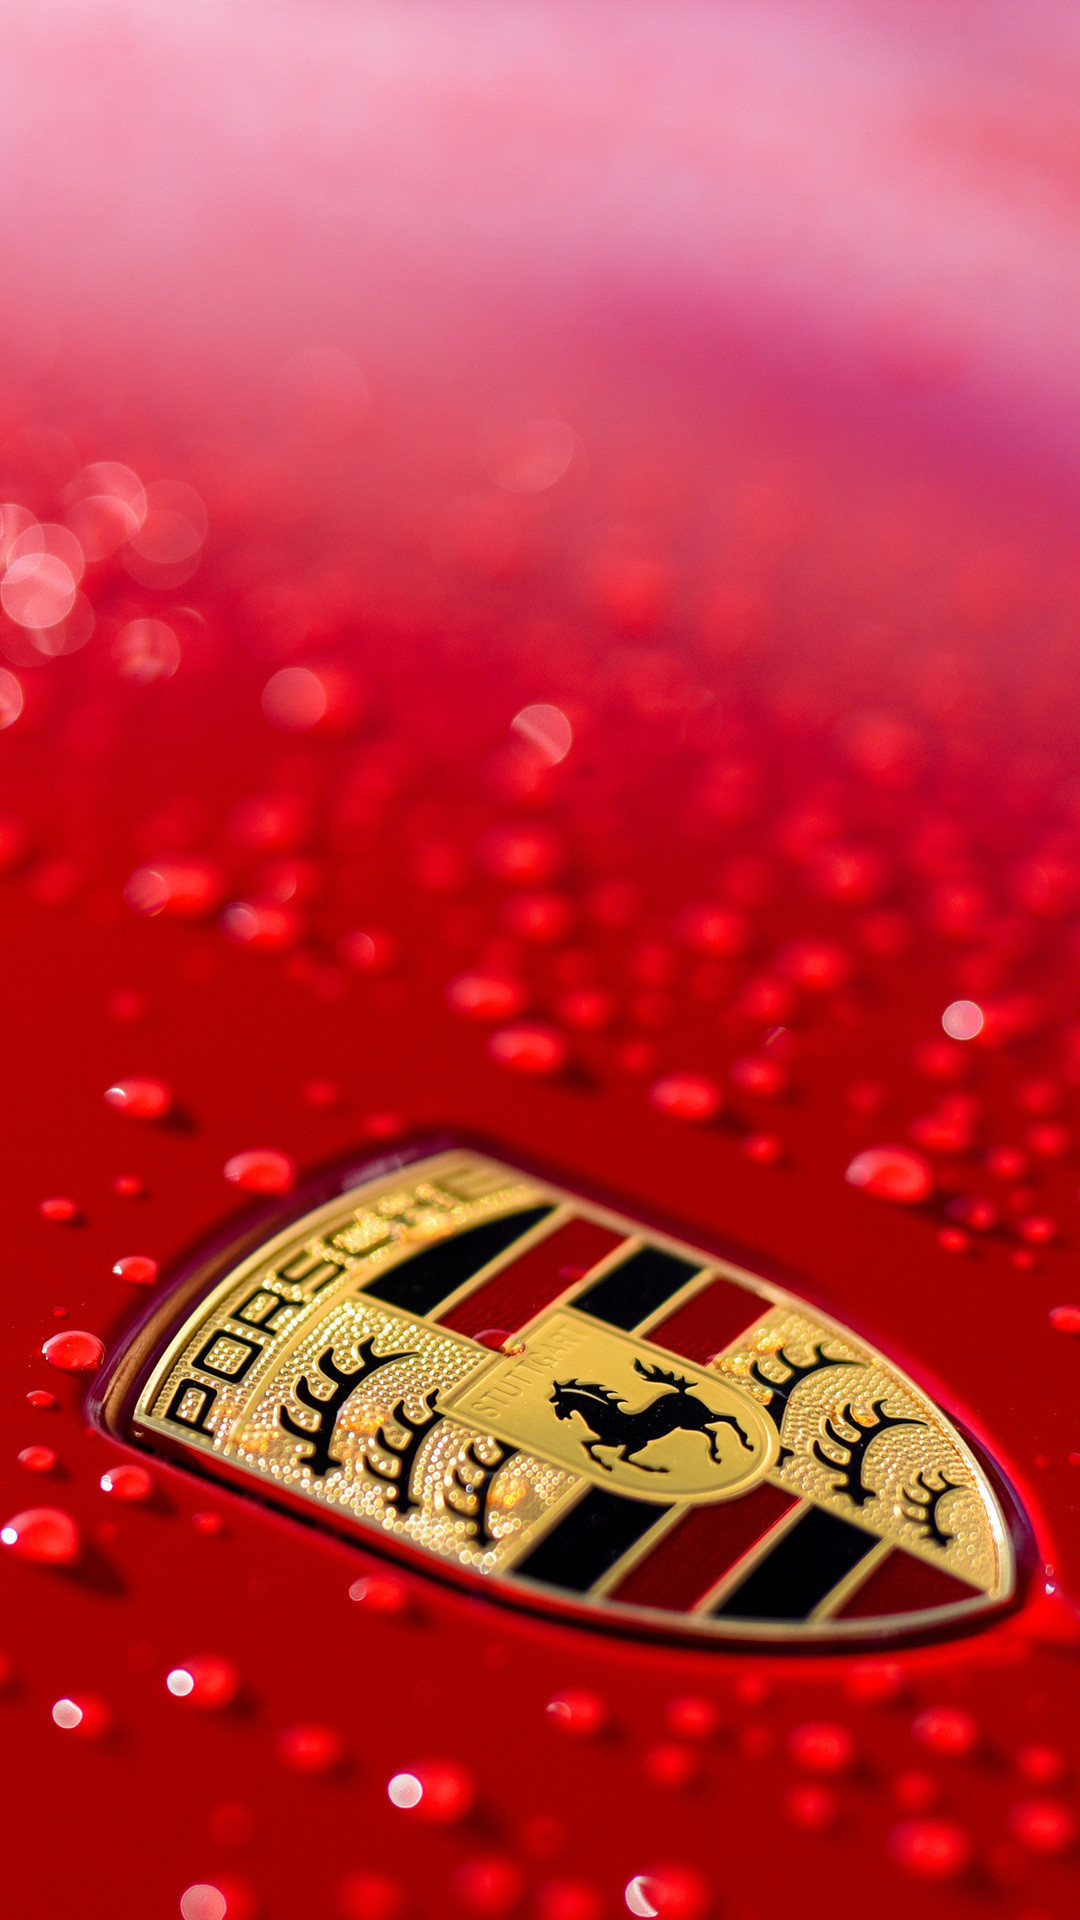 1080x1920 Porsche Logo 4k (Iphone 7,6s,6 Plus, Pixel xl ,One Plus 3,3t,5)